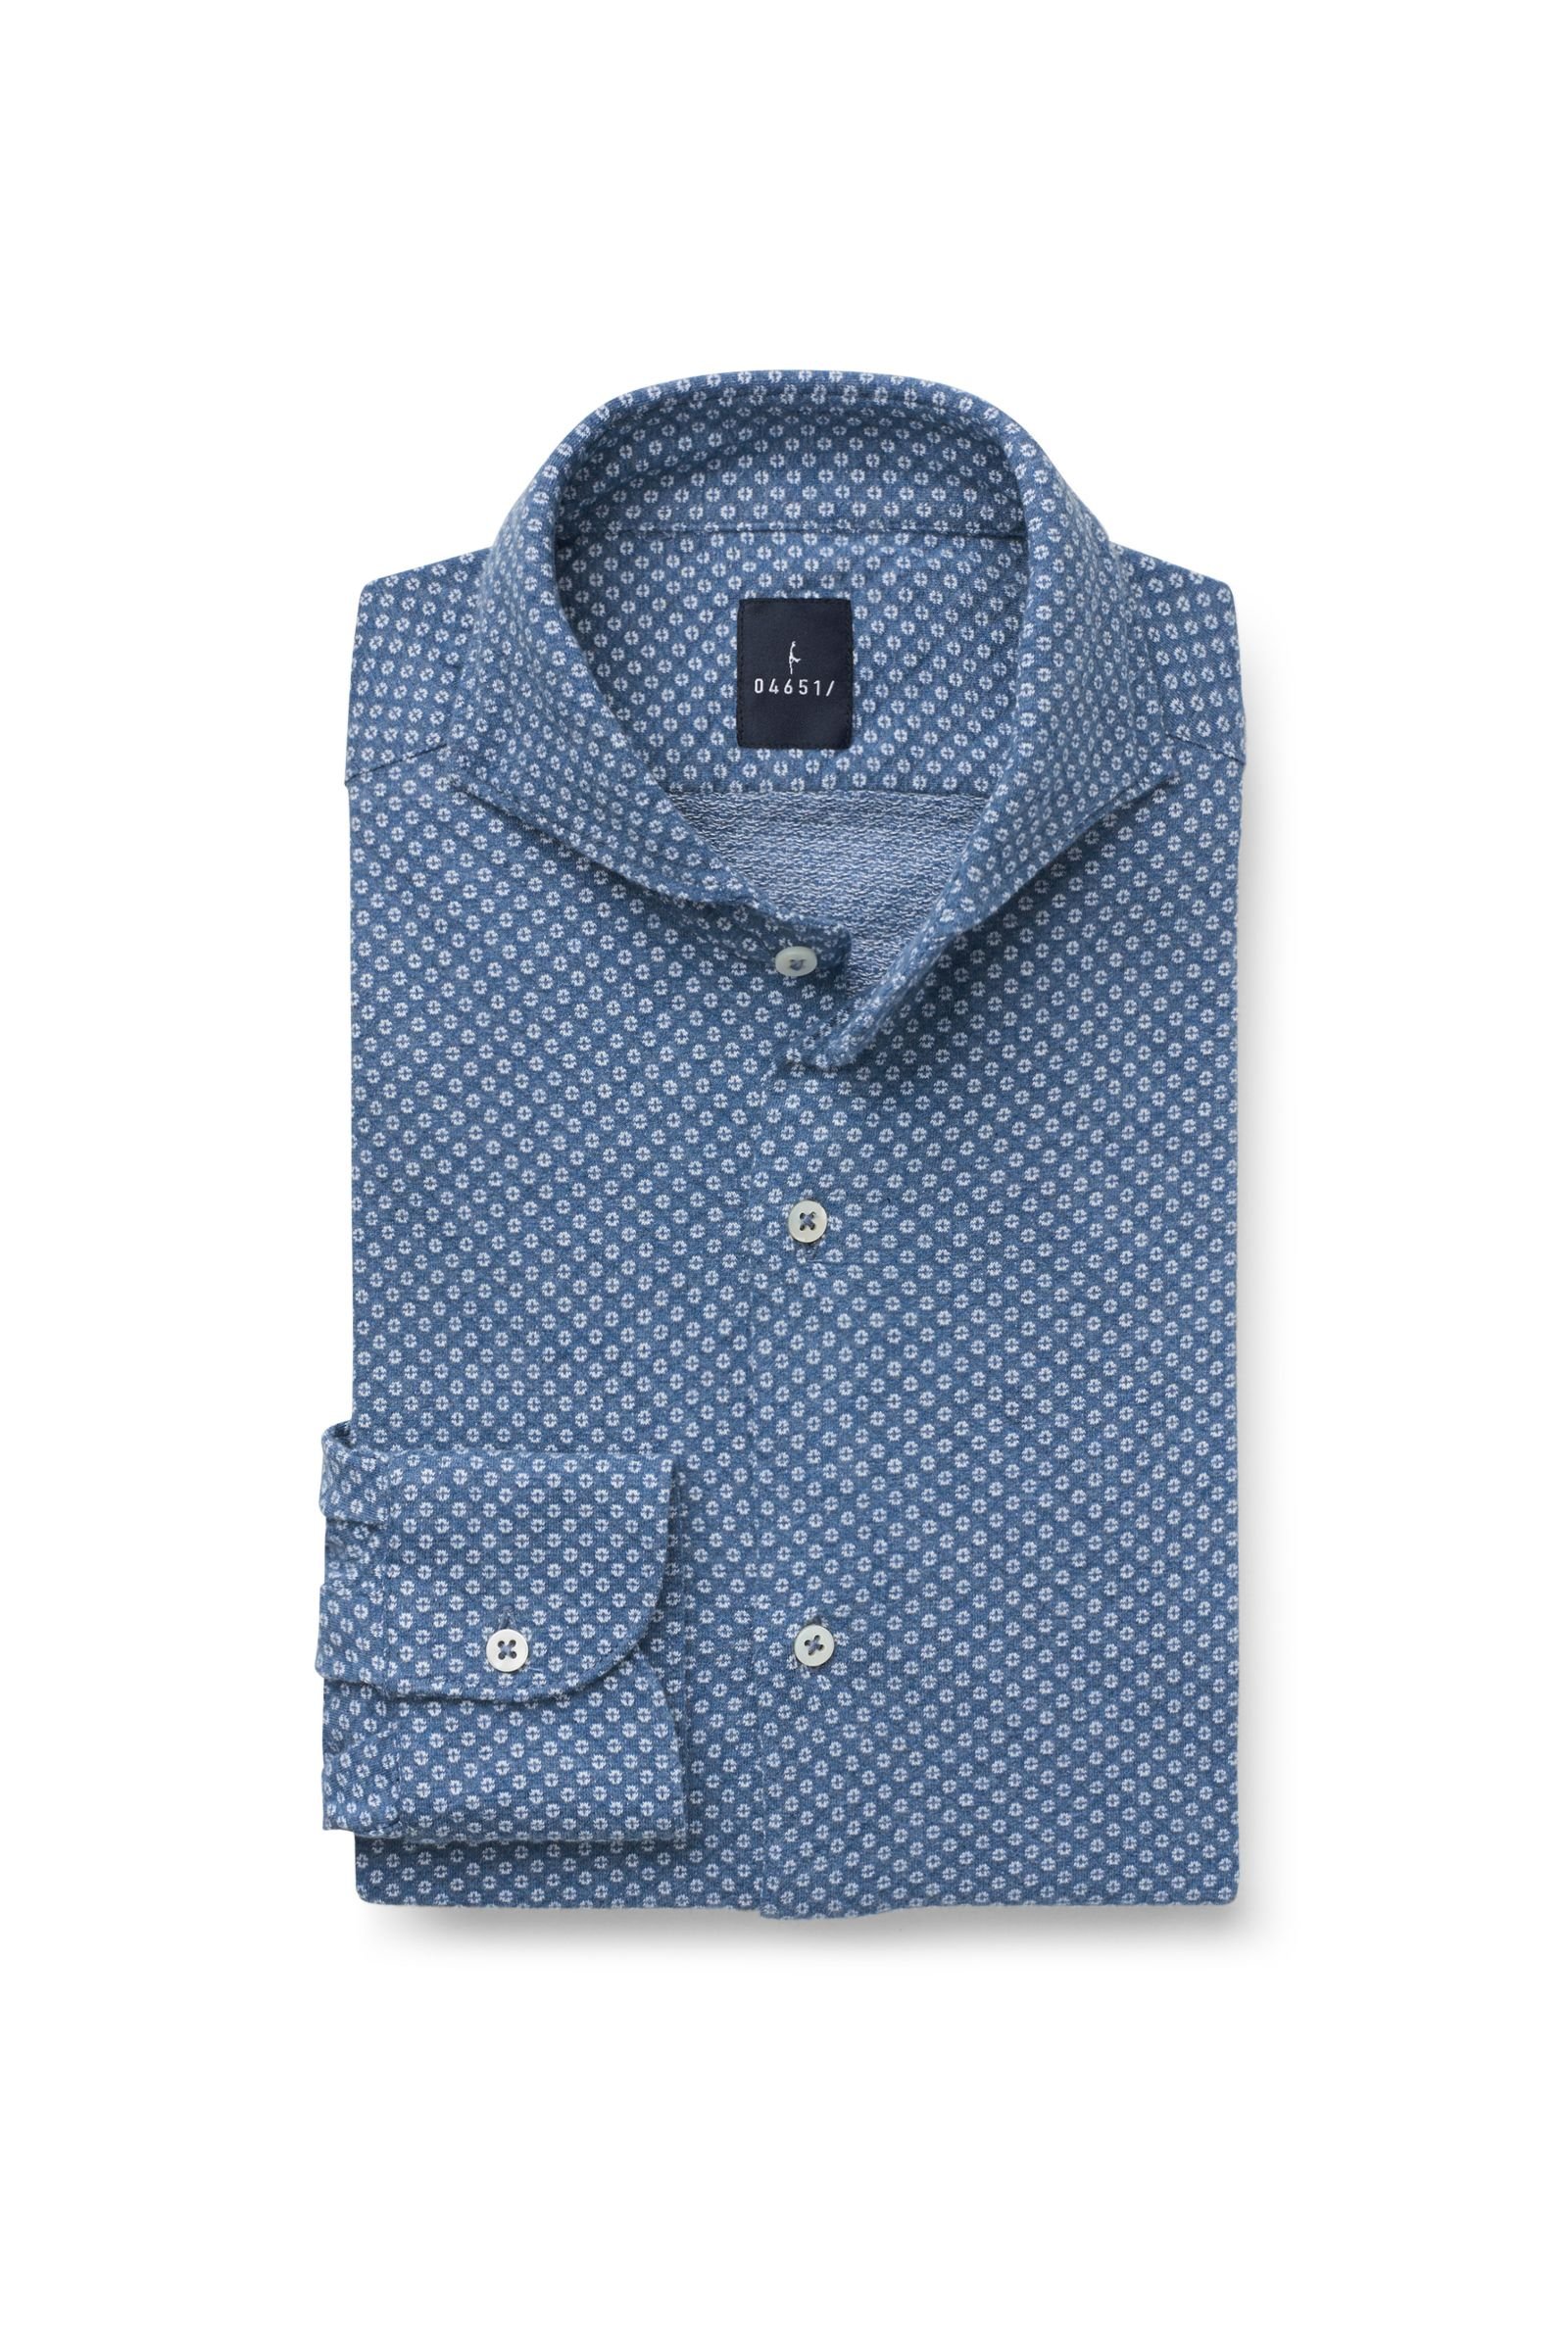 Jersey shirt shark collar smoky blue patterned